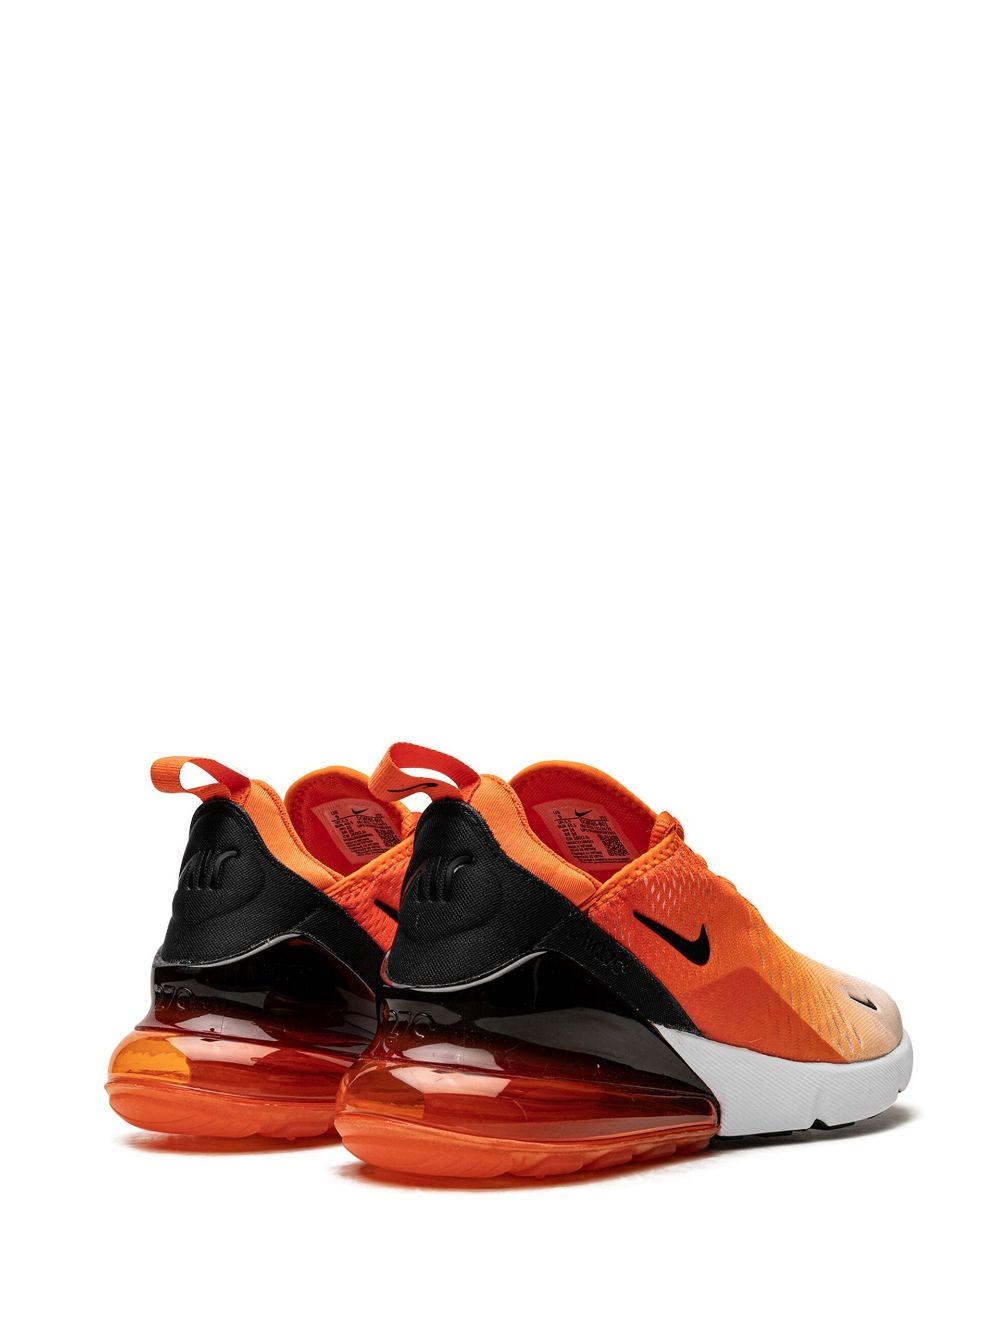 Air Max 270 "Orange Juice" sneakers - 3